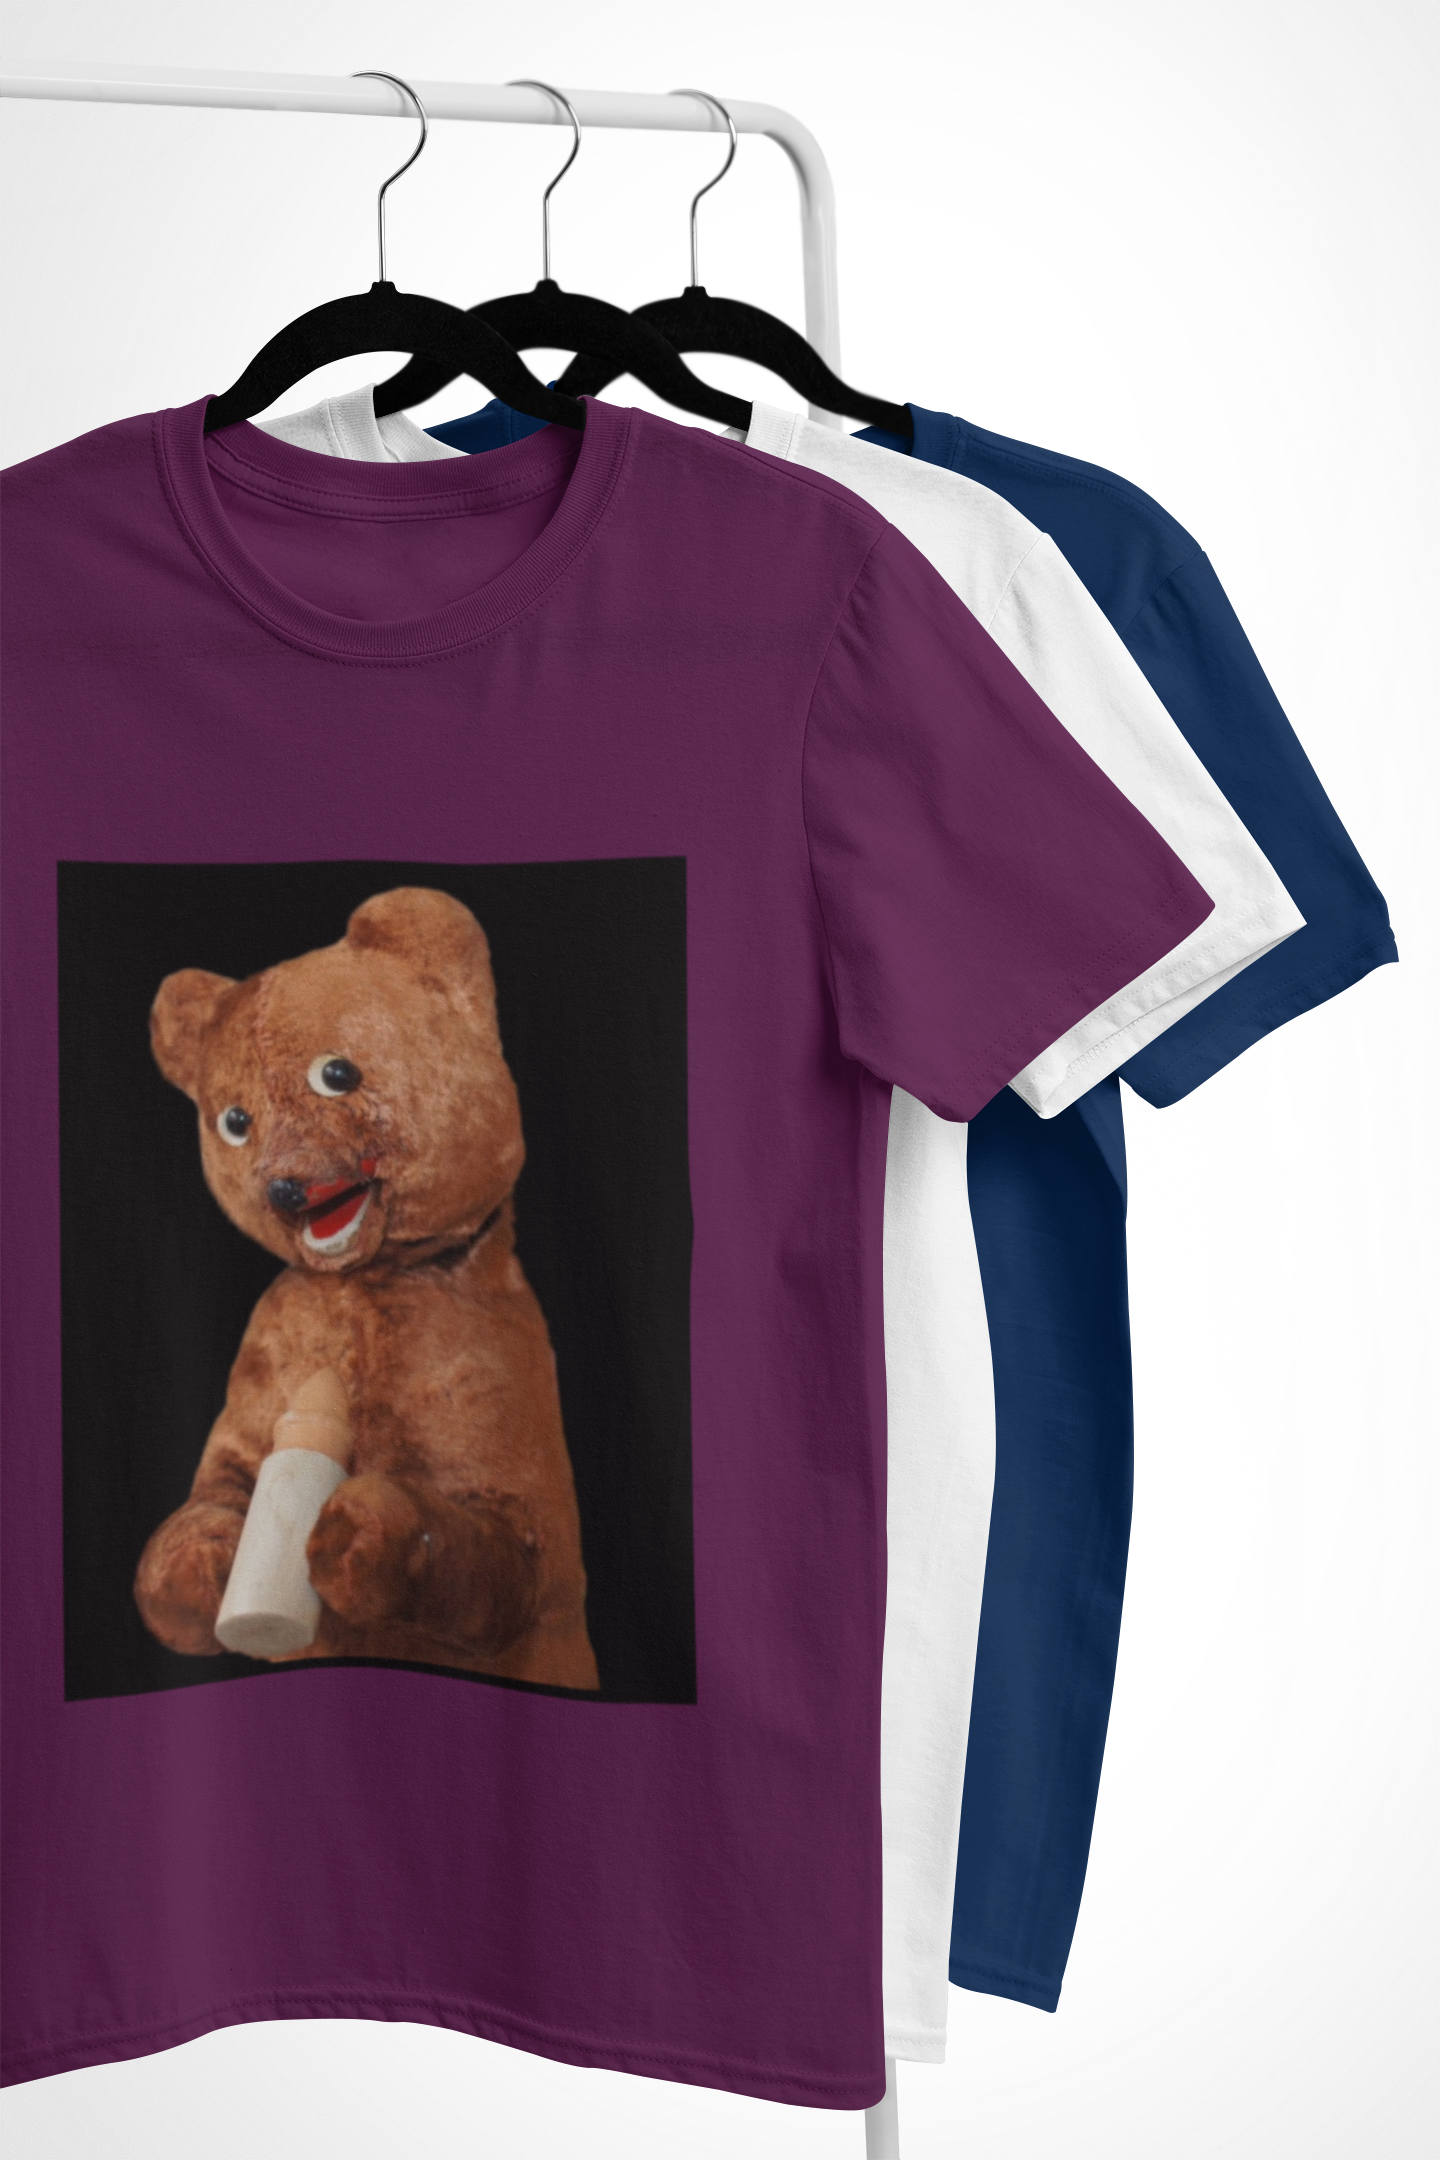 Creepy Bear Unisex Shirt